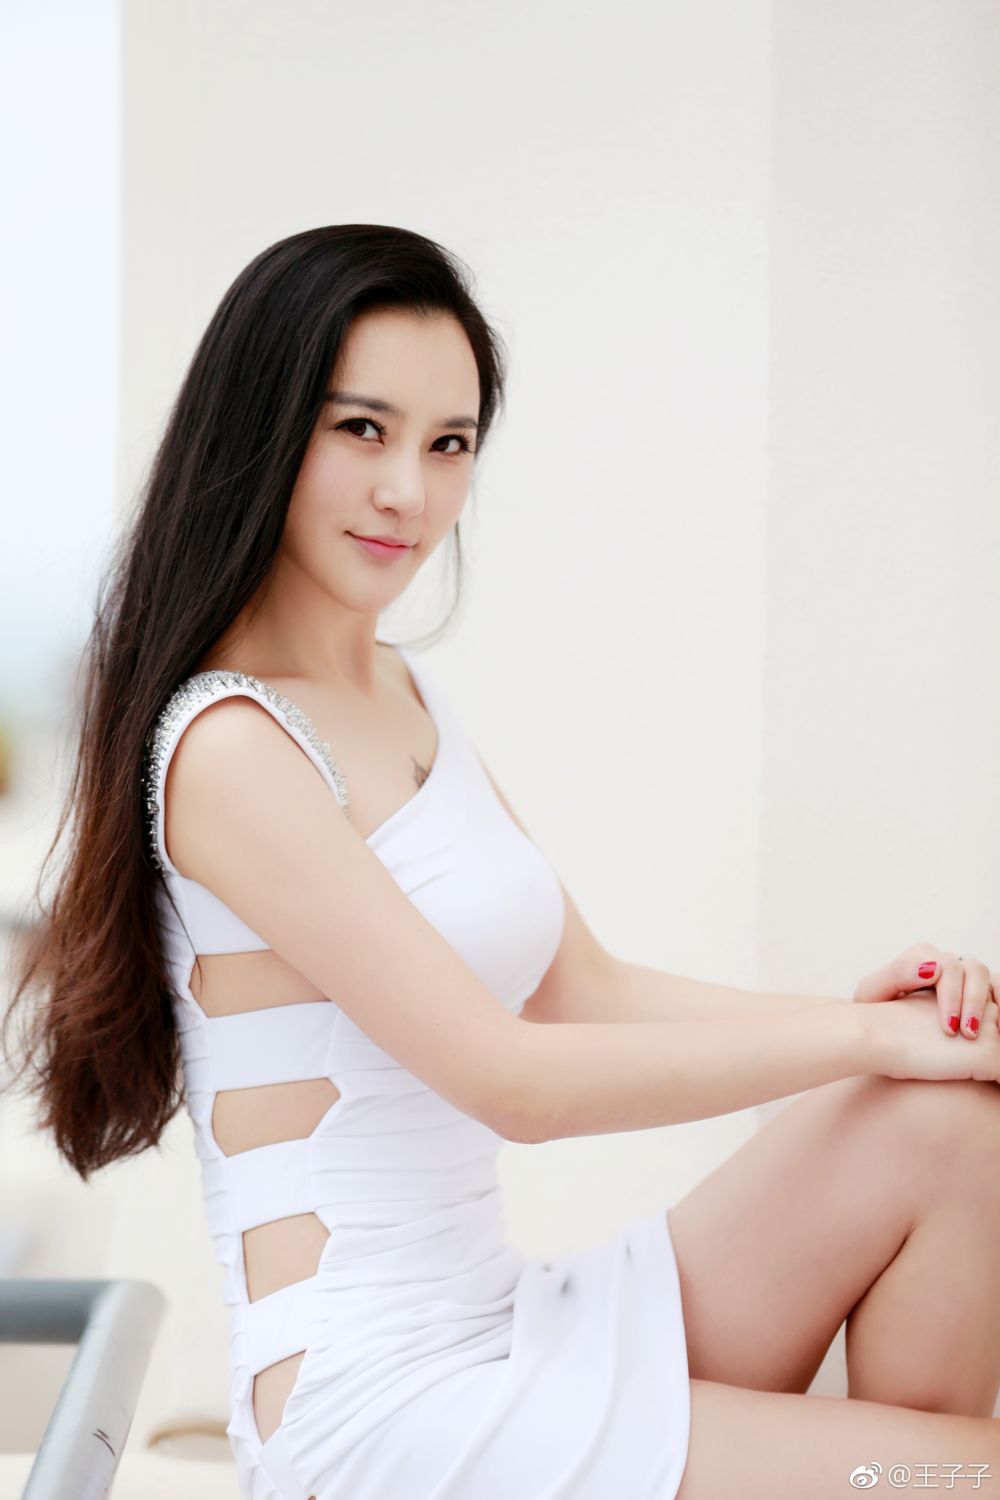 Zizi Wang Sexy and Hottest Photos , Latest Pics